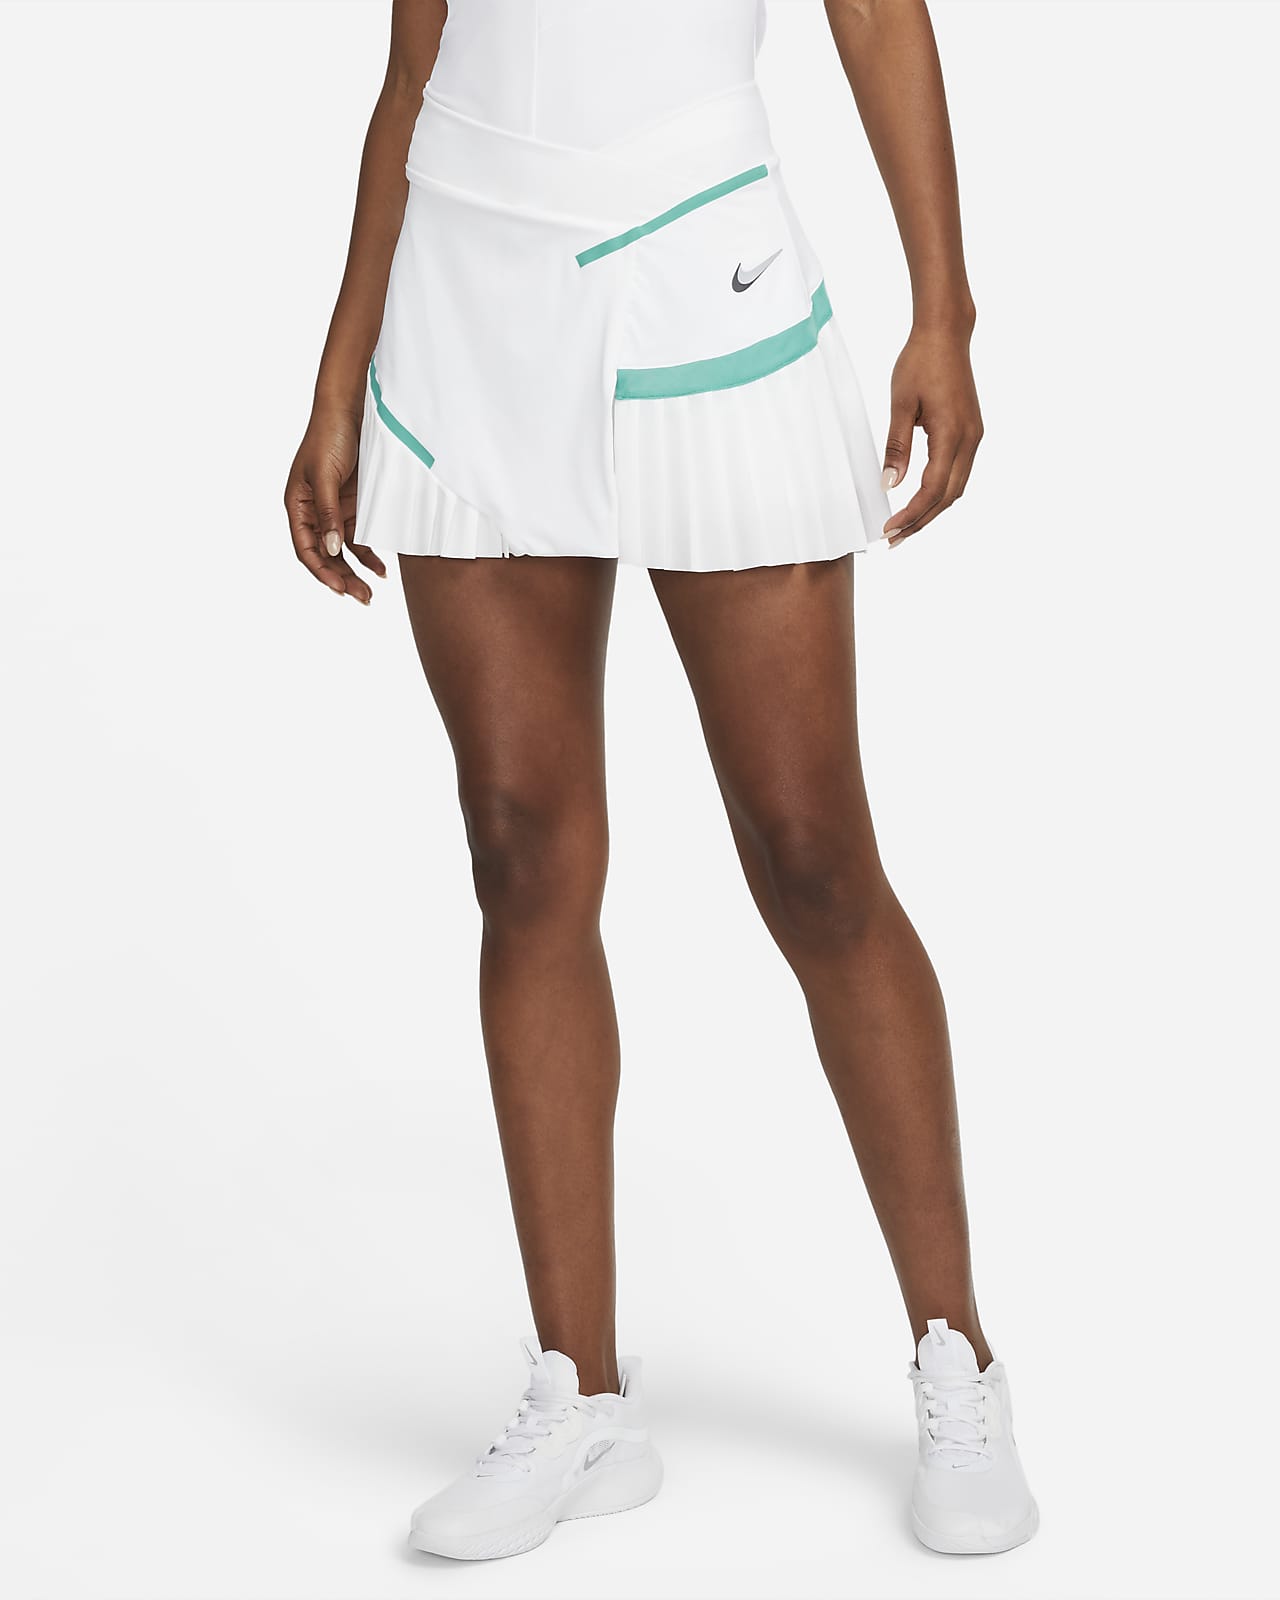 NikeCourt Dri-FIT Women's Tennis Skirt